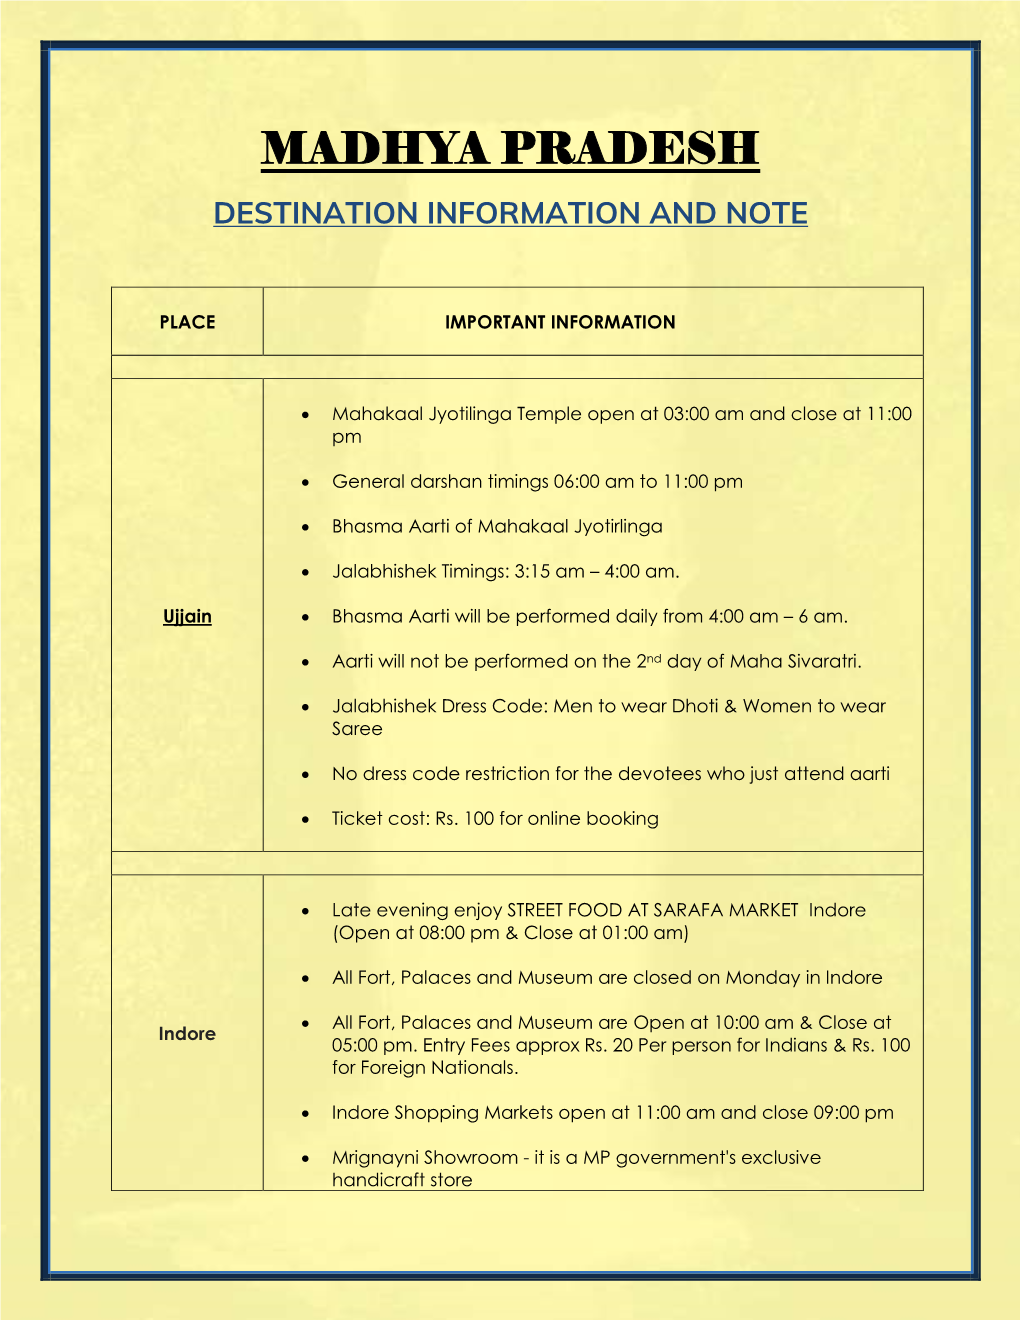 Madhya Pradesh Destination Information and Note